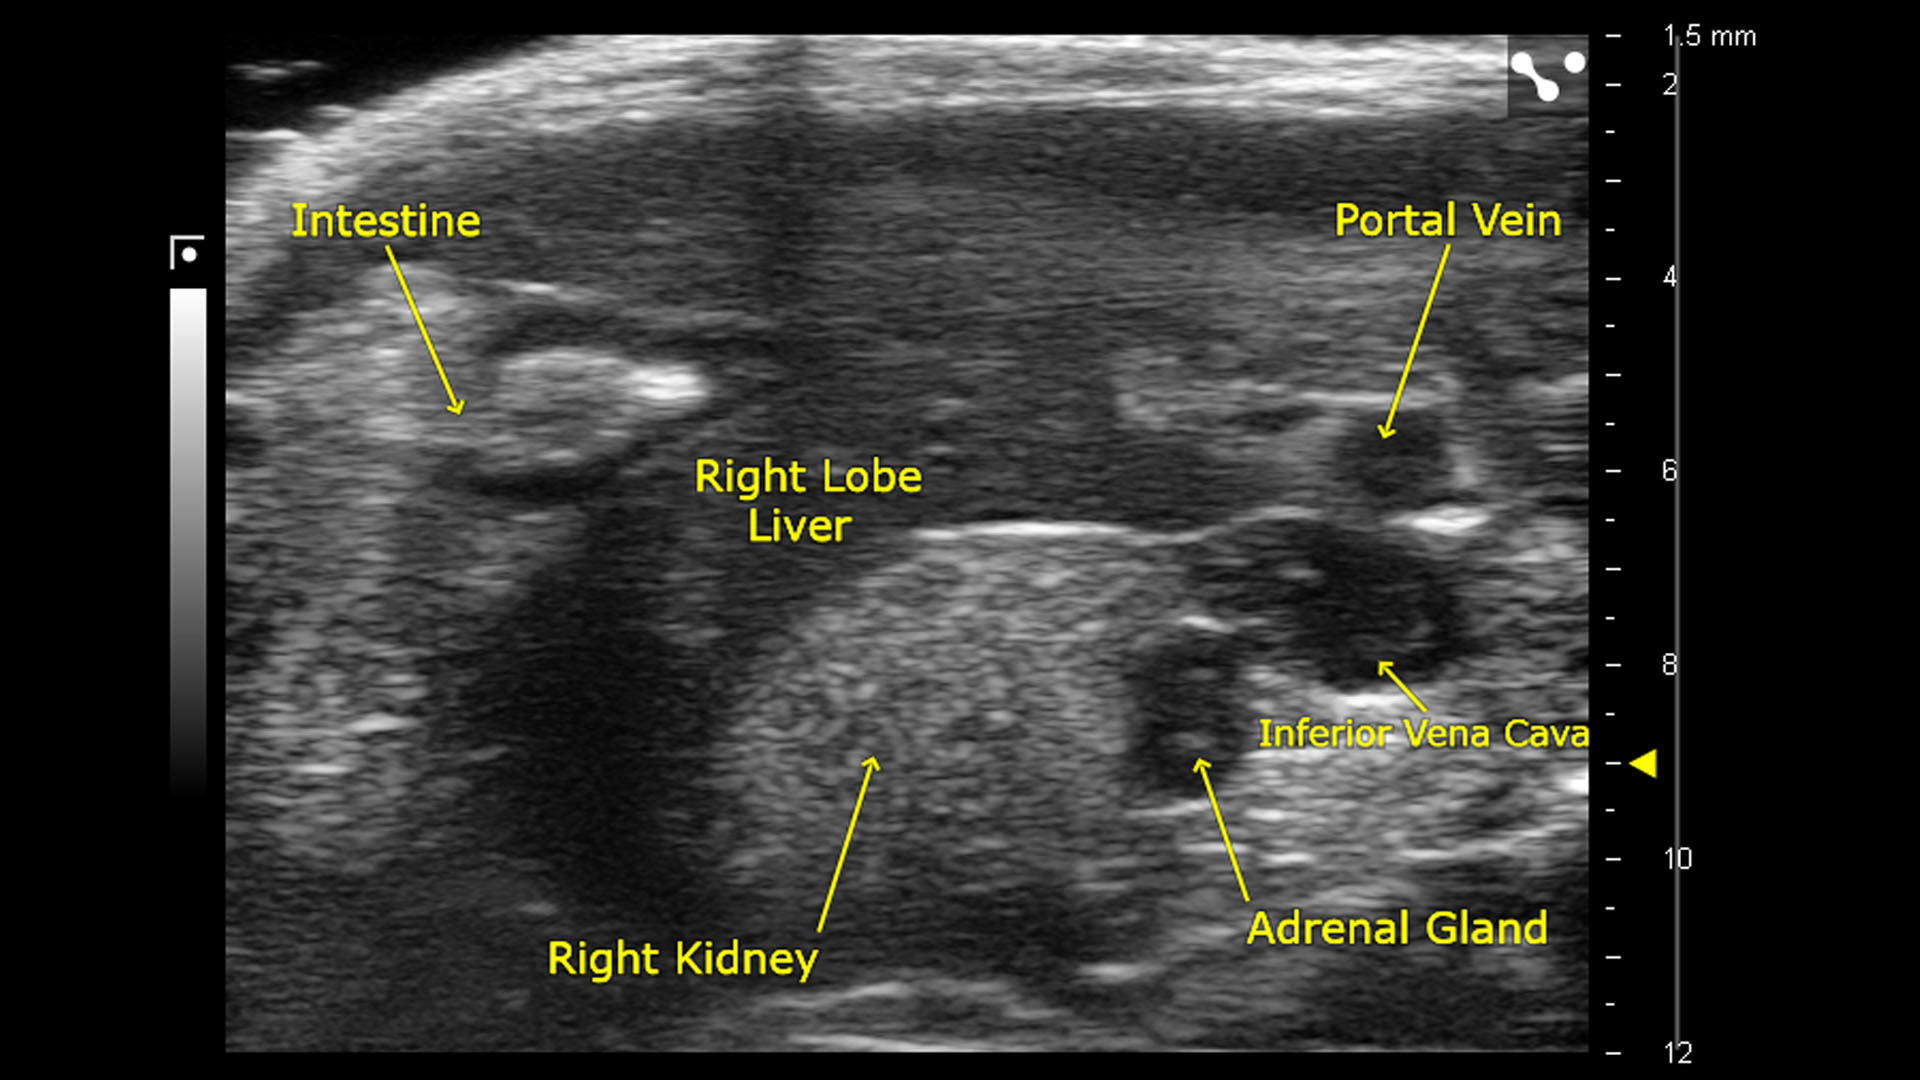 B-mode of intestine, right kidney, right lobe liver, portal vein, inferior vena cava, and adrenal gland